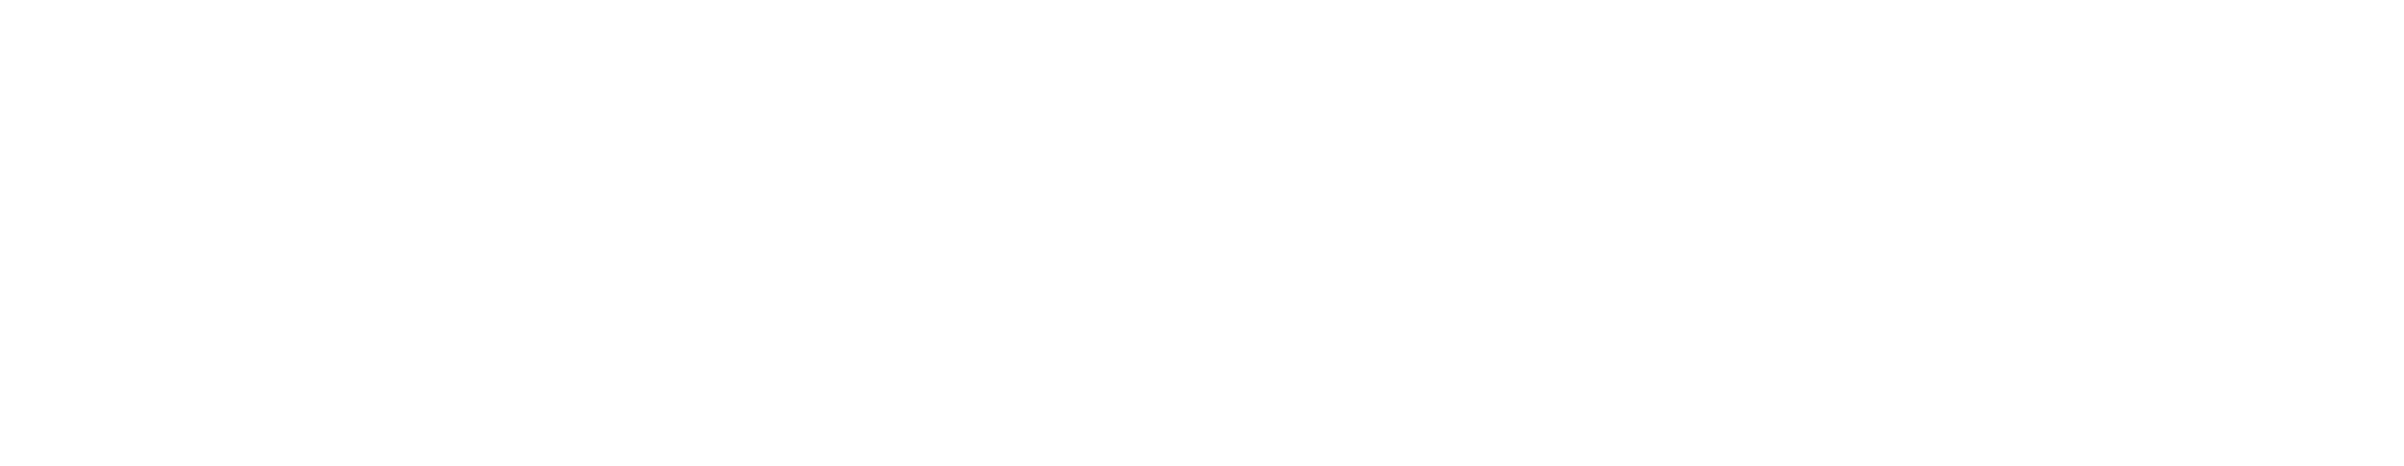 Florida College Logo